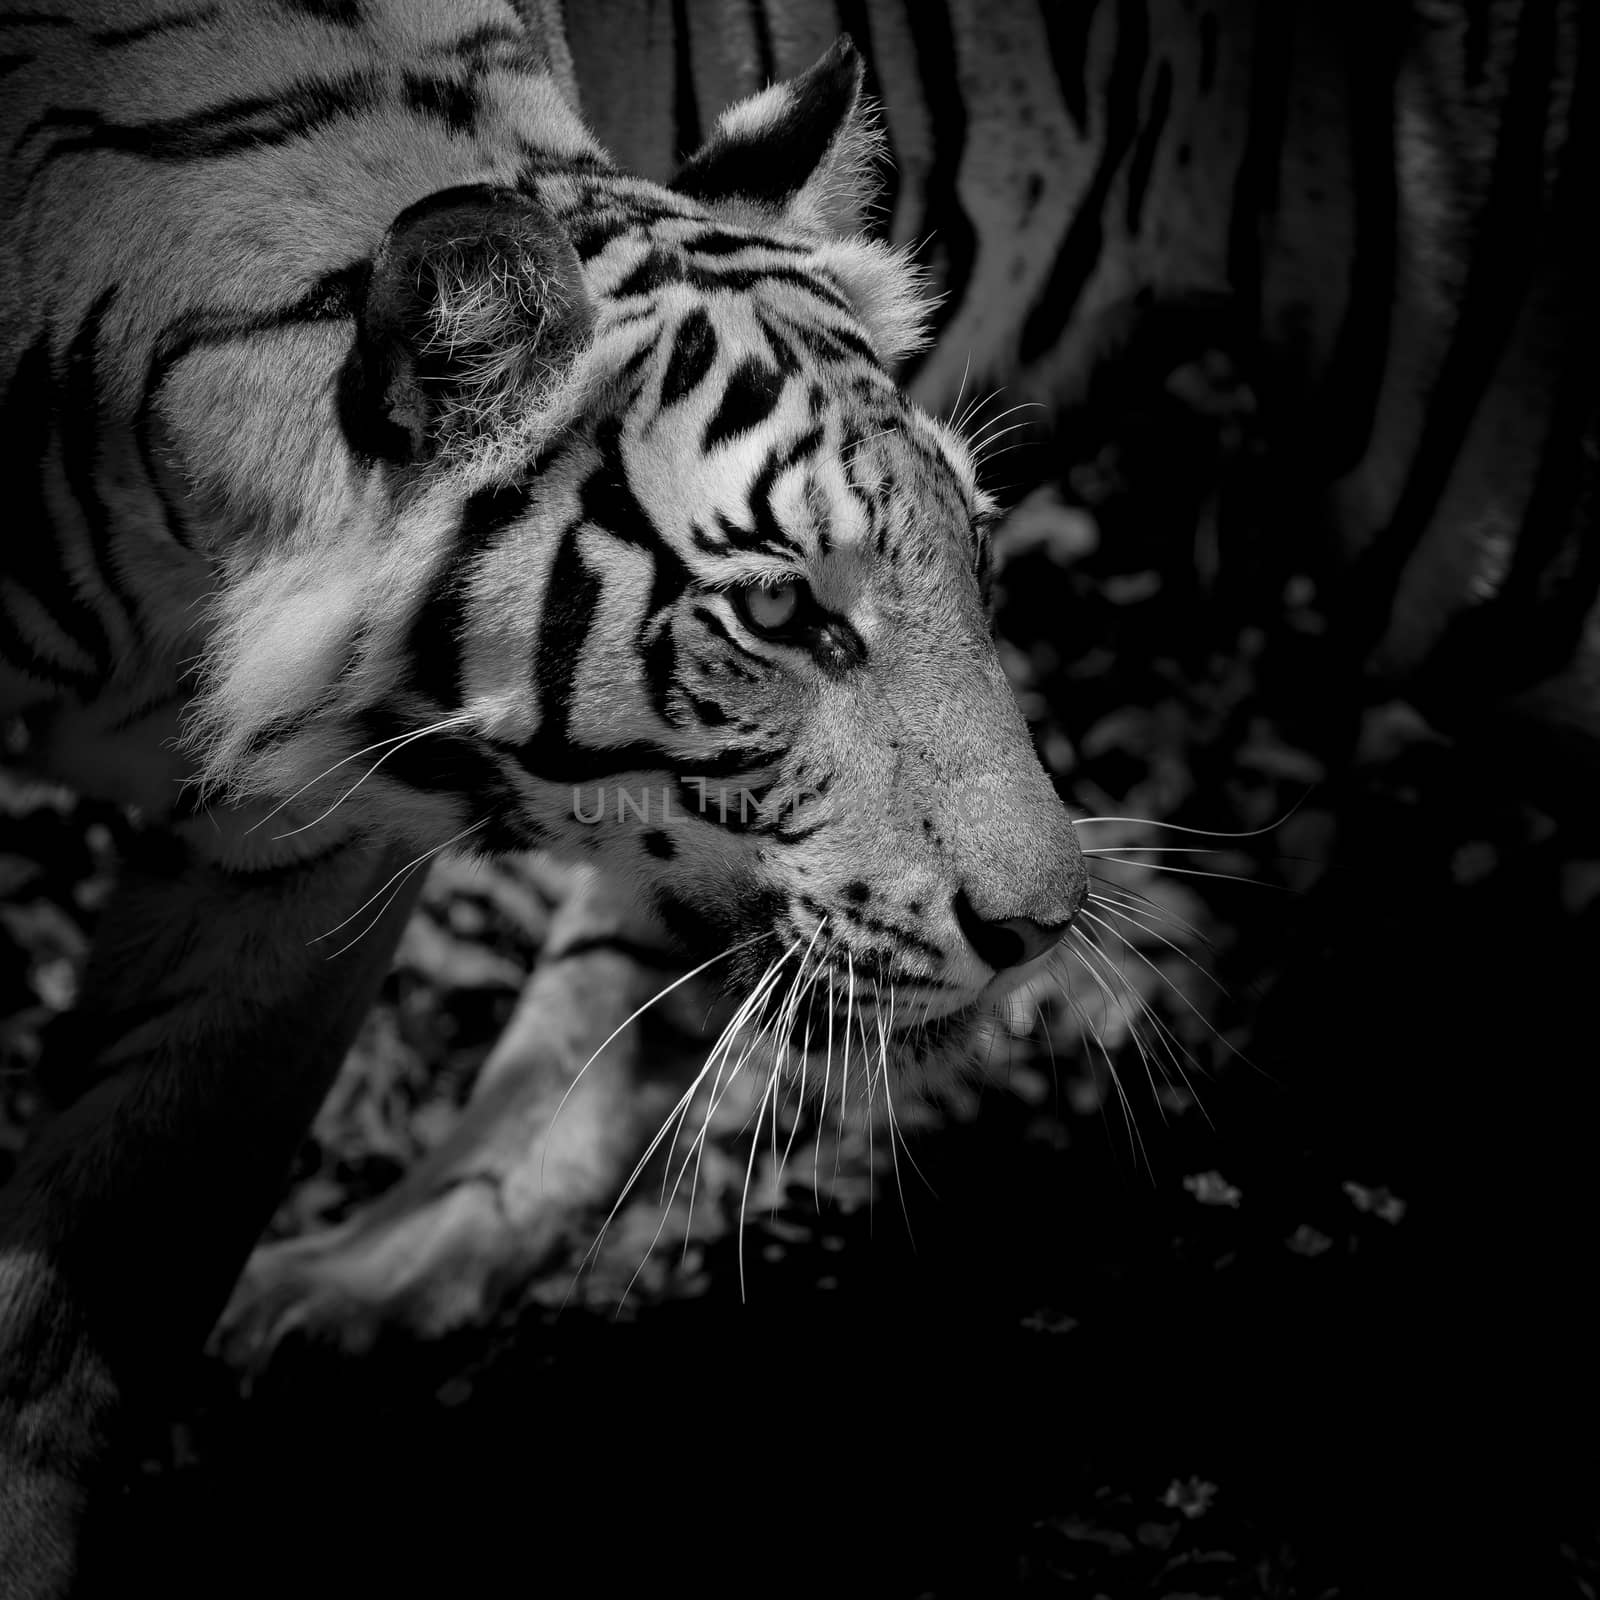 Black & White Beautiful tiger - isolated on black background